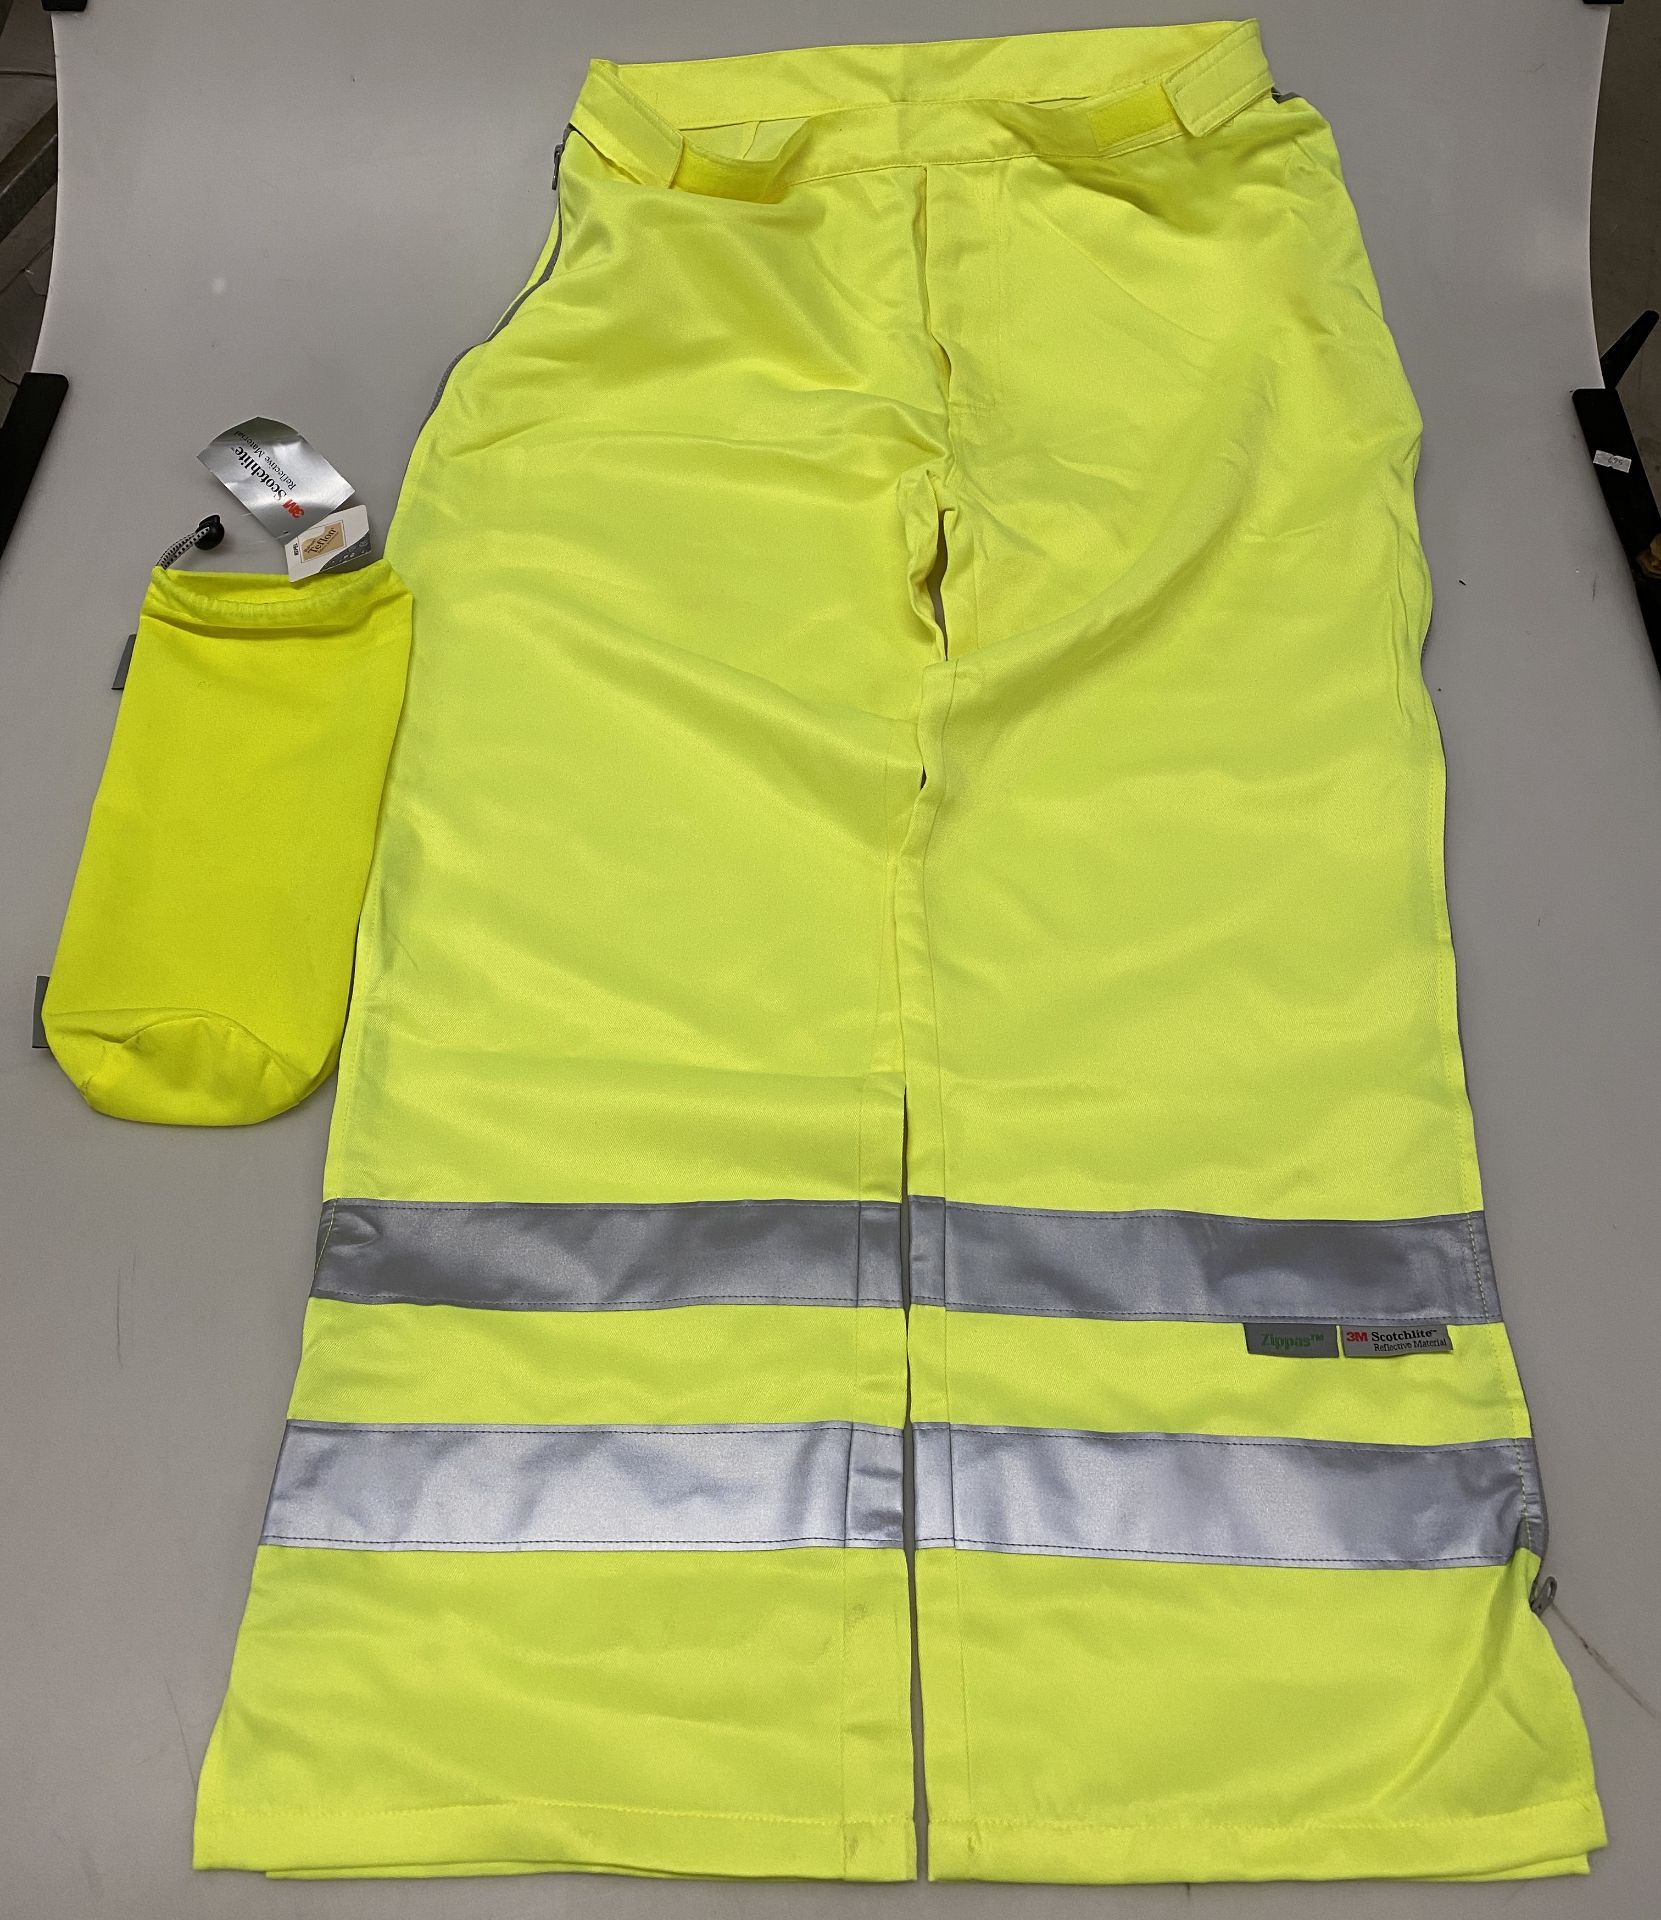 16 x Hi-Vi Zippas MX yellow PPE high visibility Telfon/Scotchlite zipped over trousers and bags.